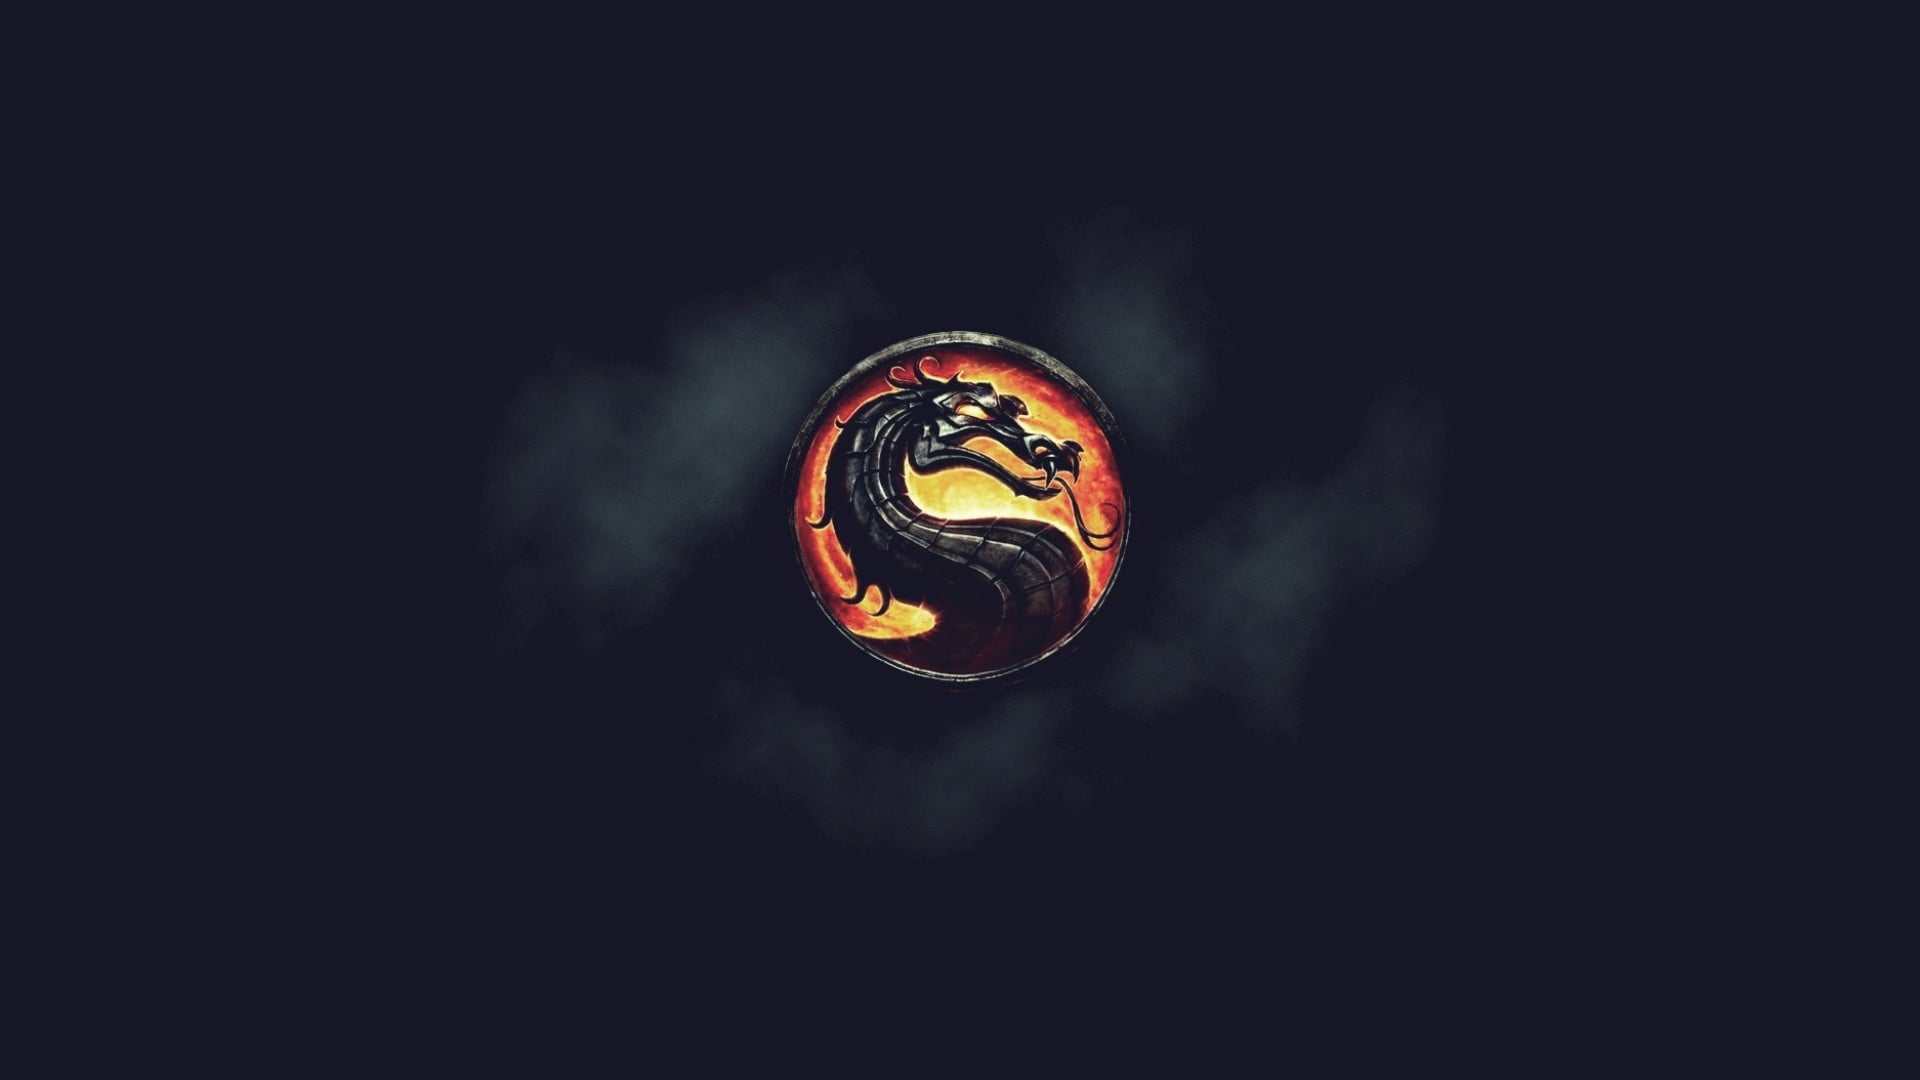 Mortal Kombat logo, video games, no people, smoke - physical structure